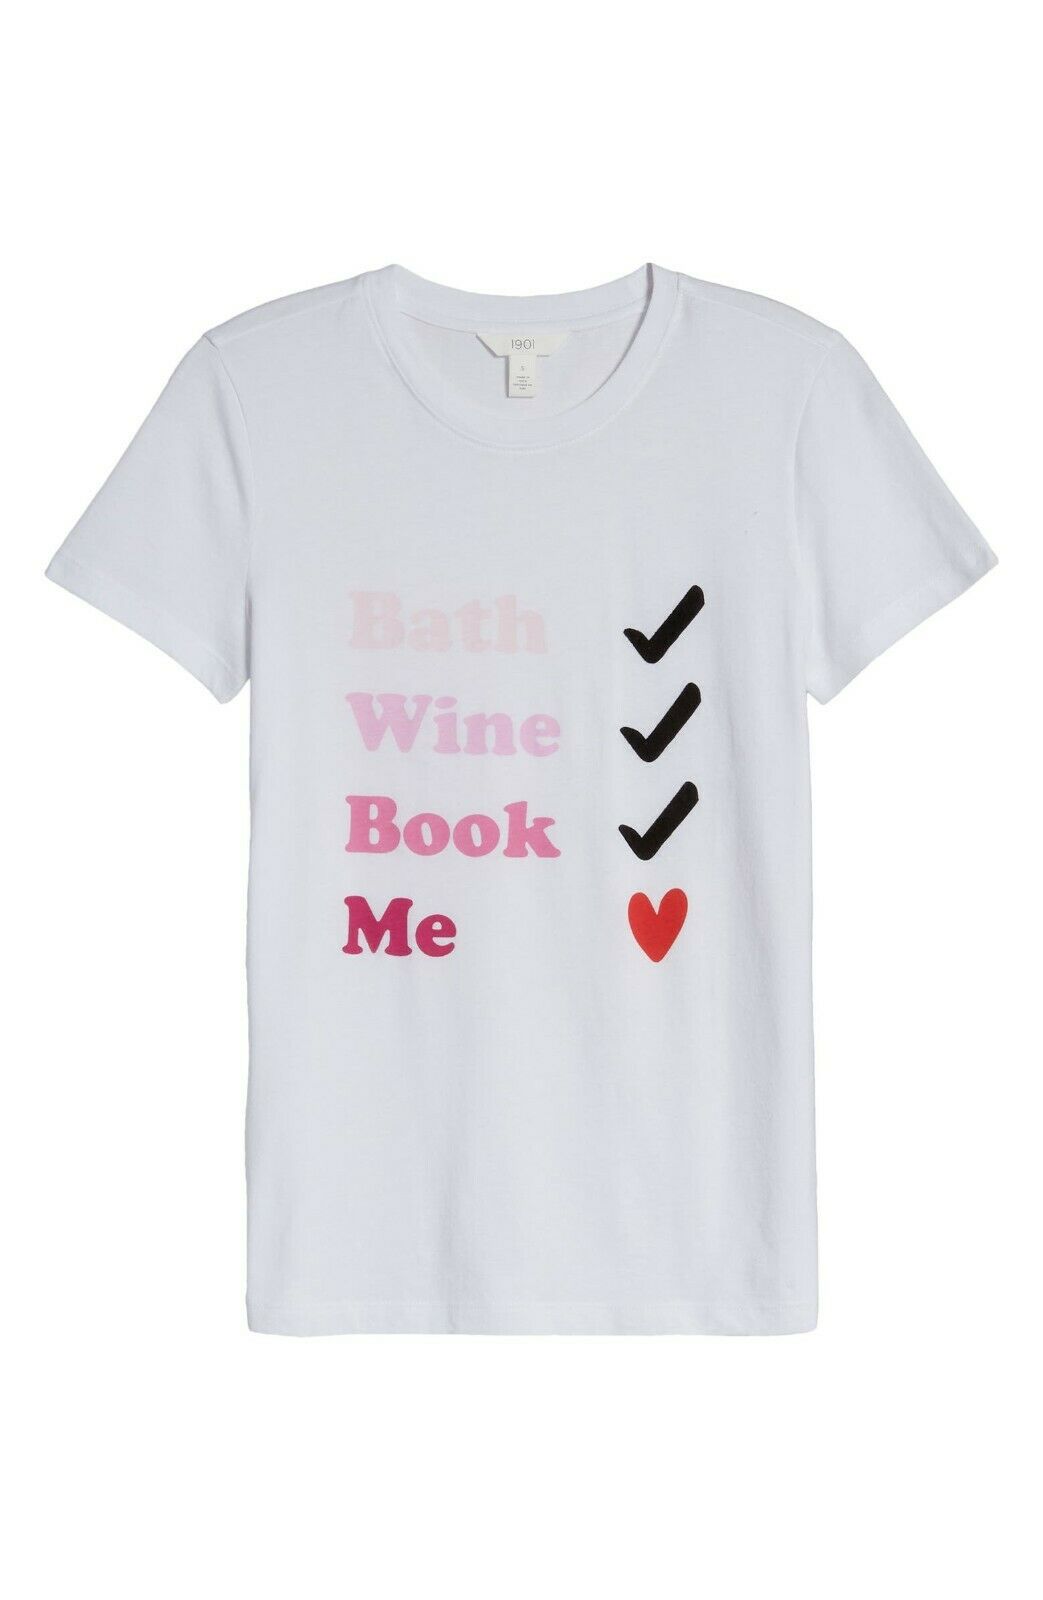 Halogen Bath Book Wine Me Graphic Tee Shirt Top, Size Large